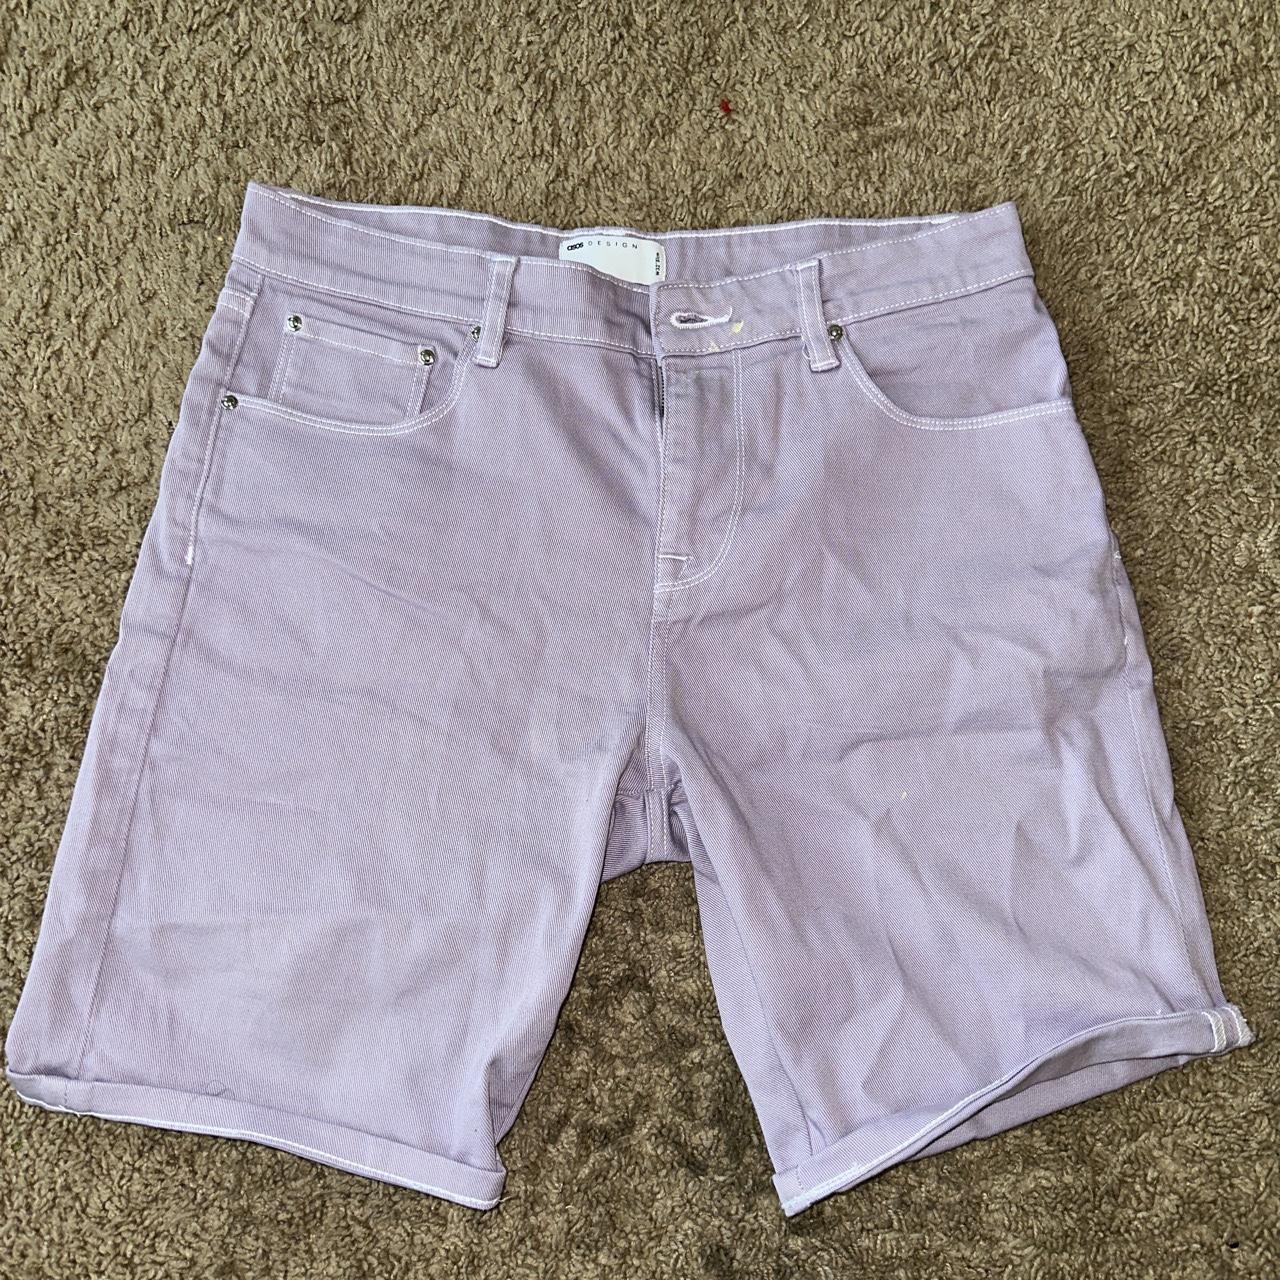 light purple jeans waist size 30-32 size medium - Depop